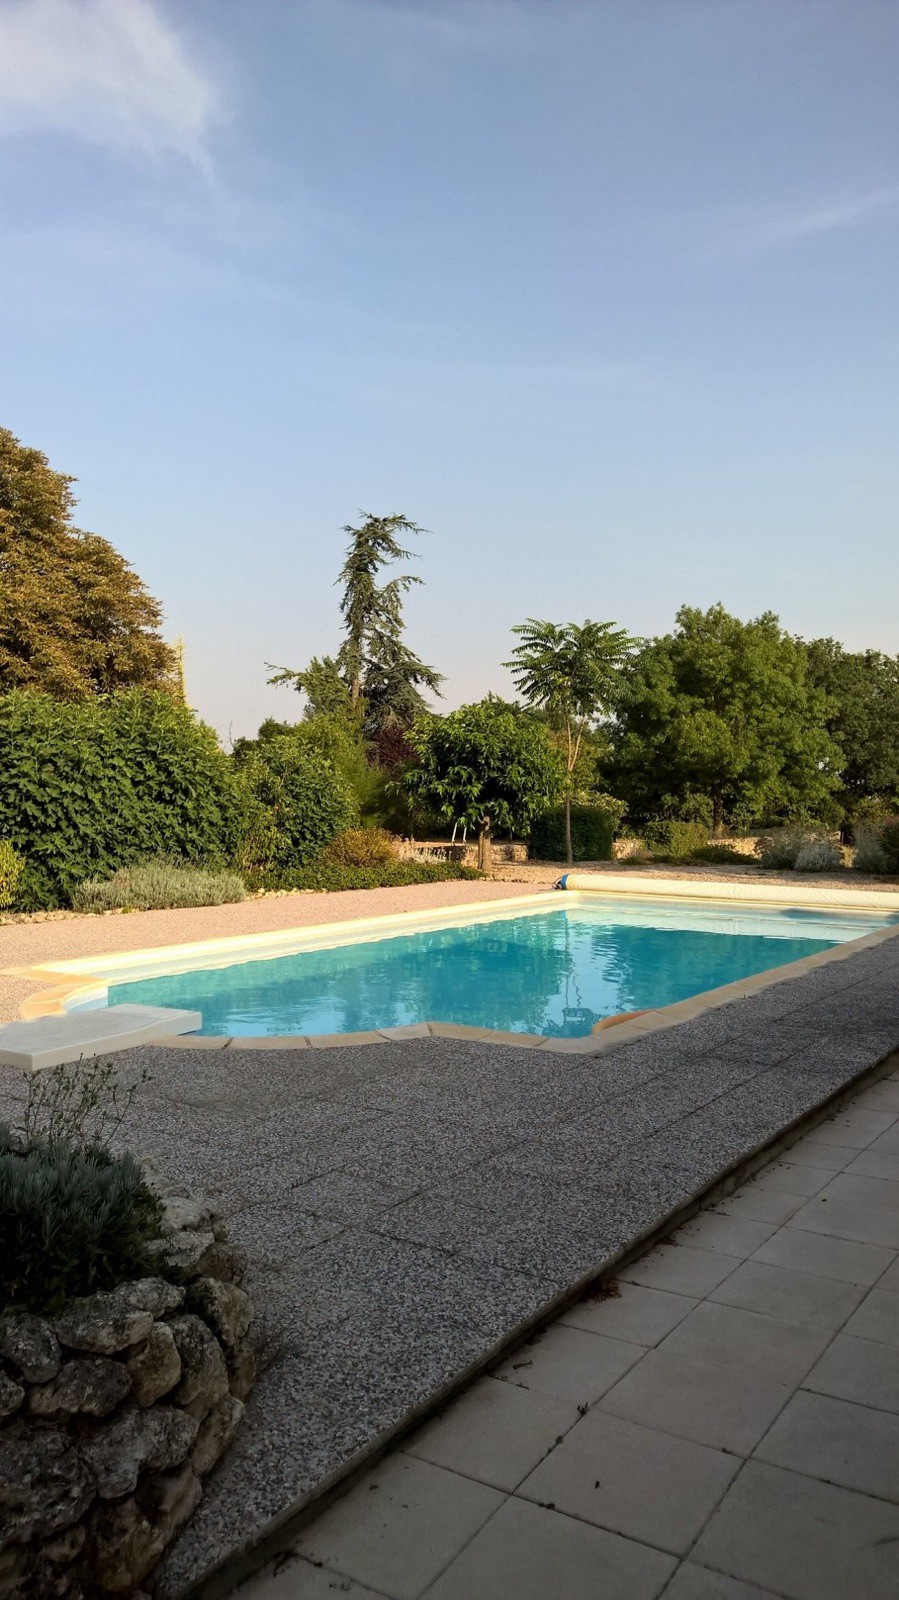 Maison en pierre avec piscine et vaste jardin